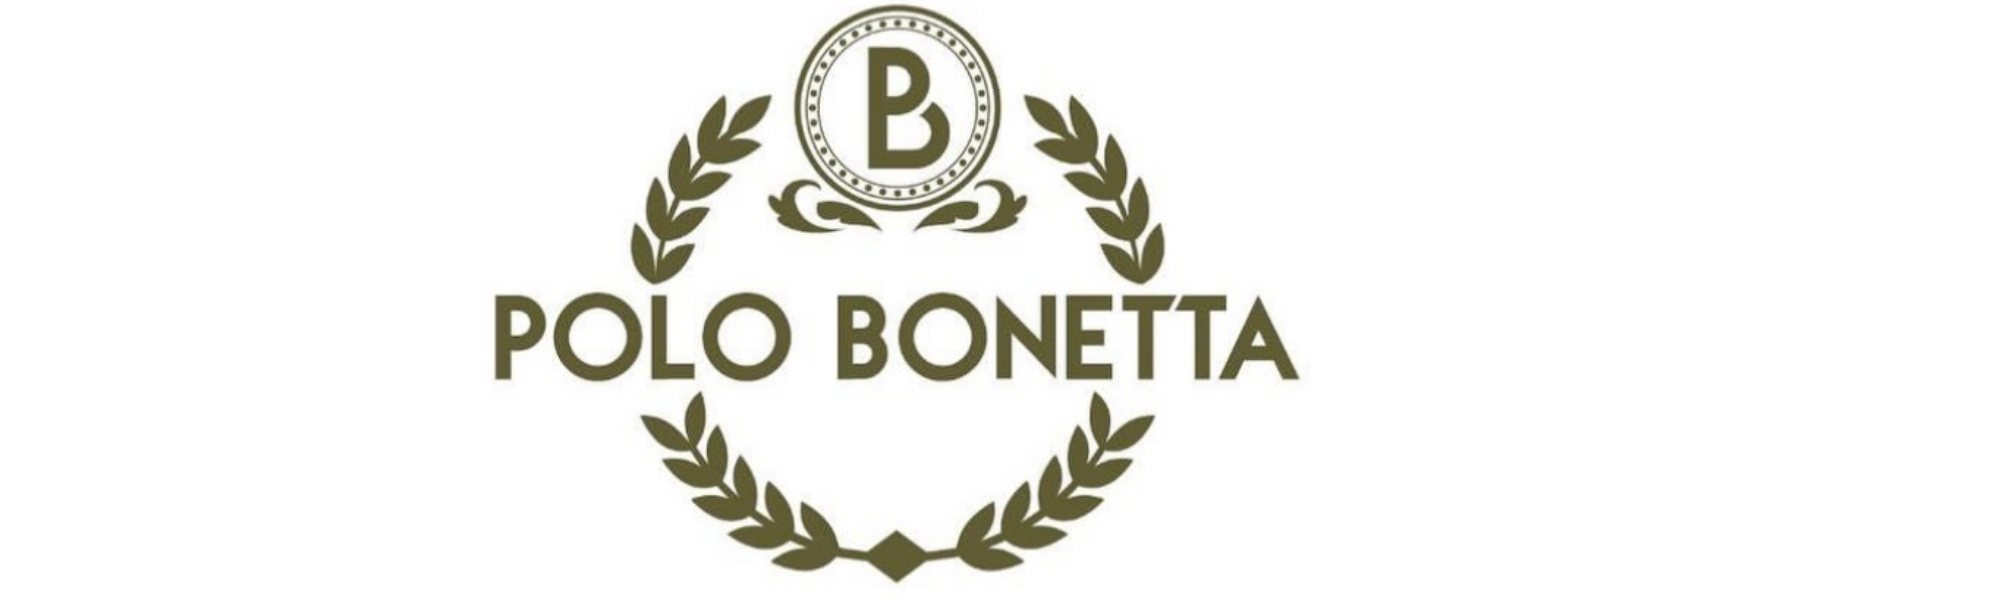 Wholesale Polo Bonetta womens clothing products.